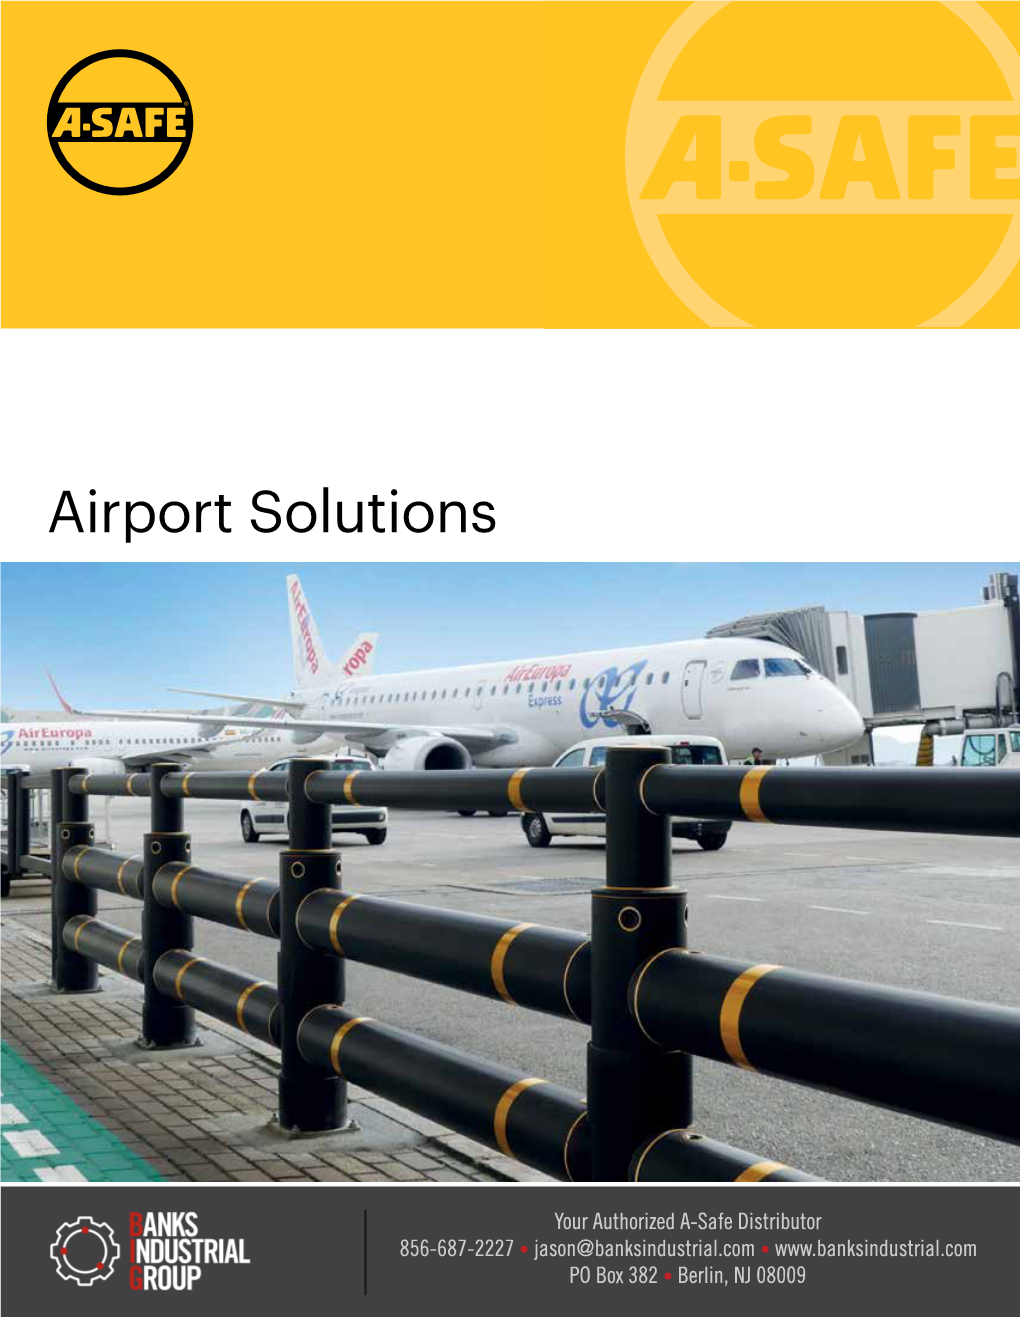 A-Safe Airport Brochure